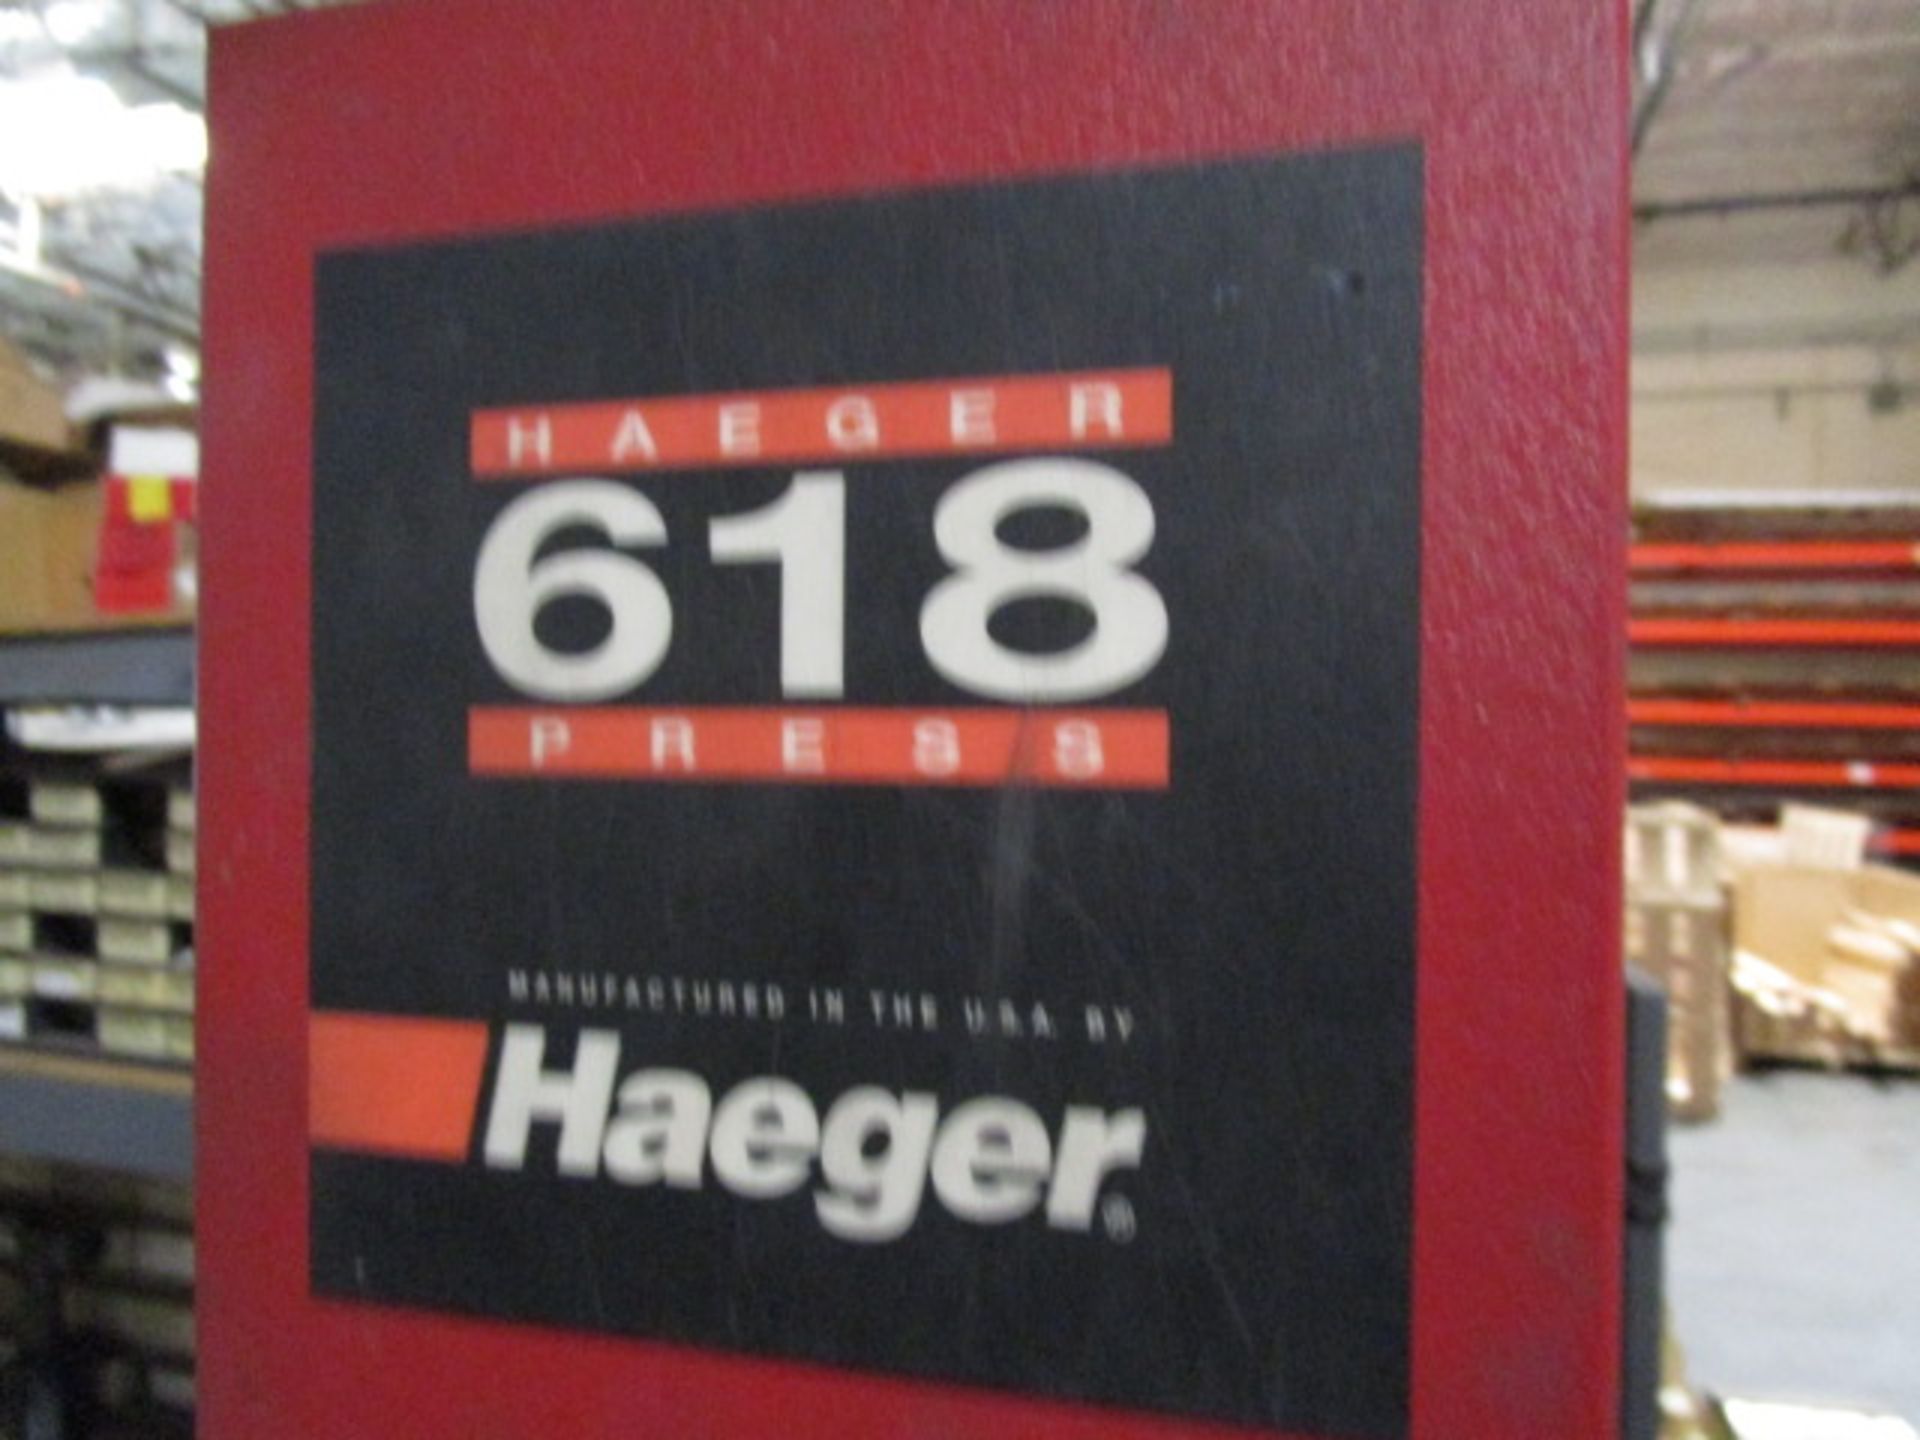 Haeger Insertion Press 618, 6 Ton Press, Model 618-1L, MFG 2000, Serial Number 06L00898 - Image 2 of 5